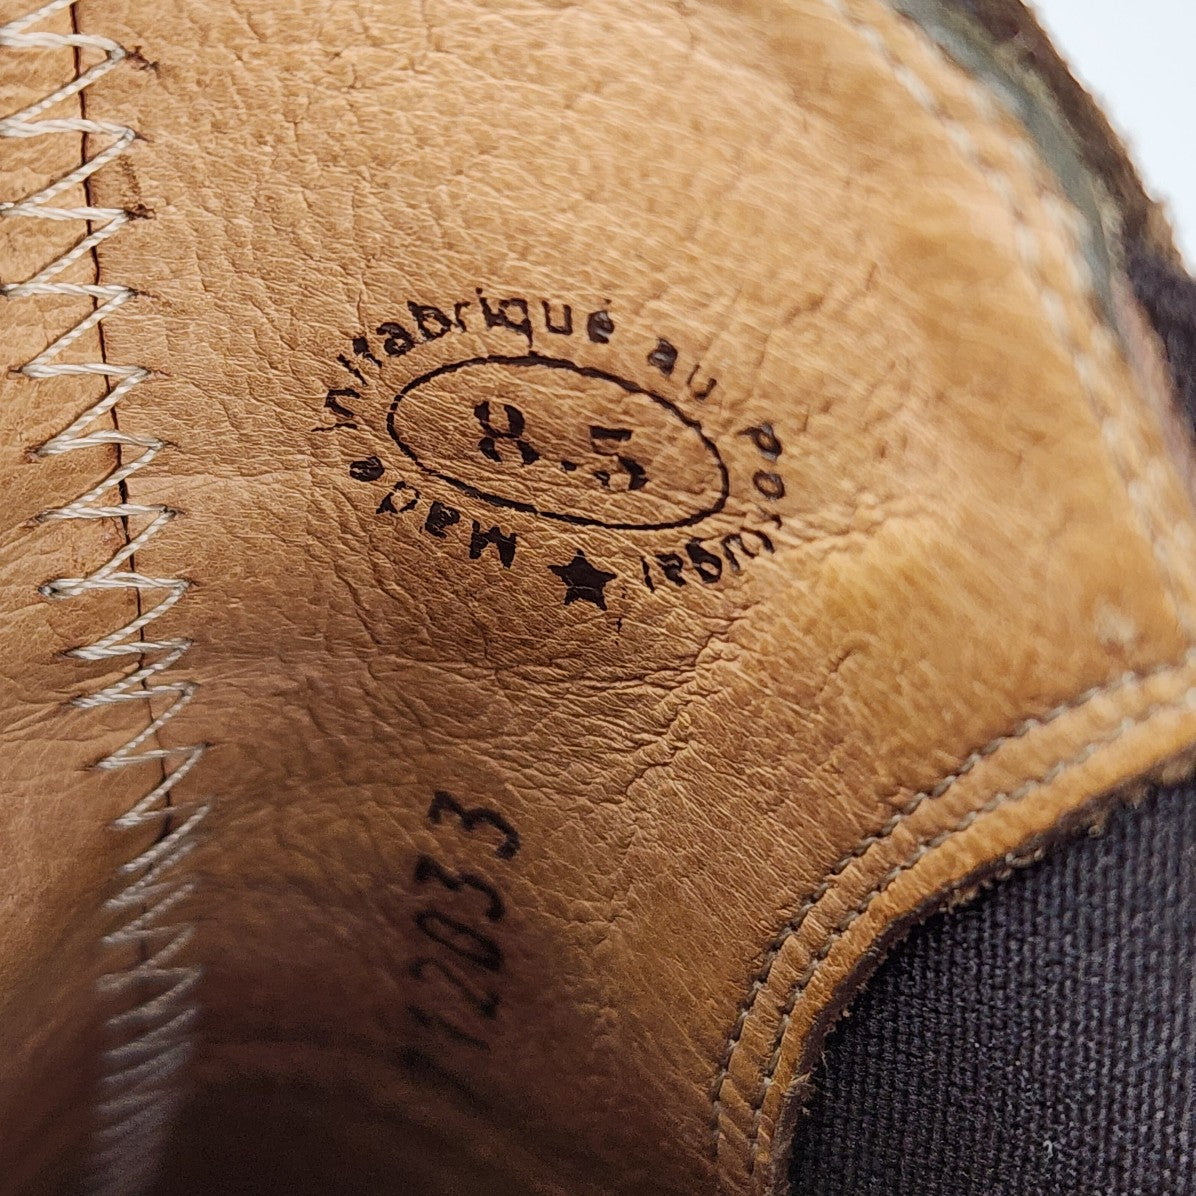 John Fluevog Wearever Dalu Brown Suede Leather Chelsea Boots Size 8.5